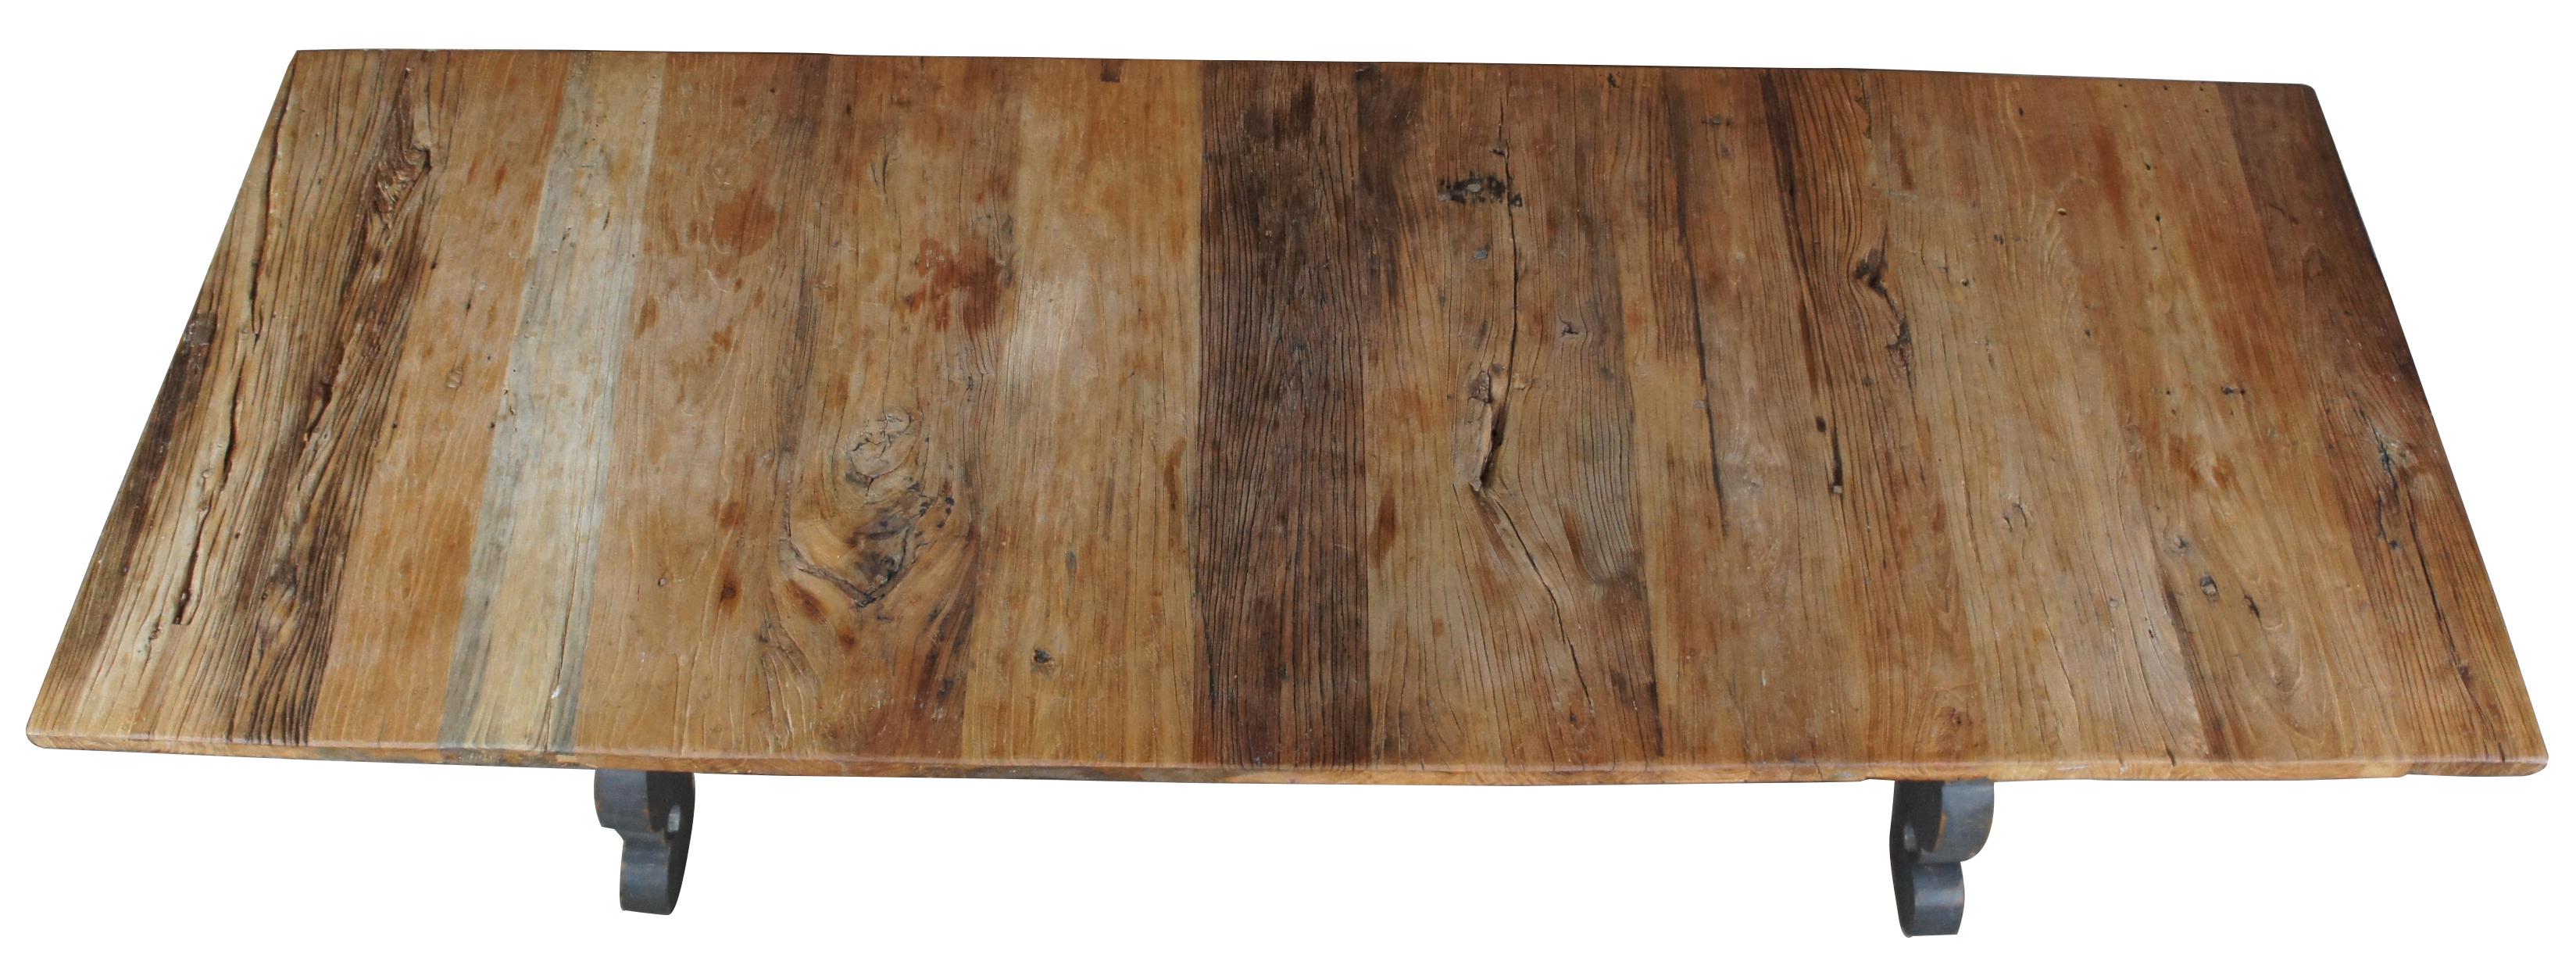 china distressed wood planks